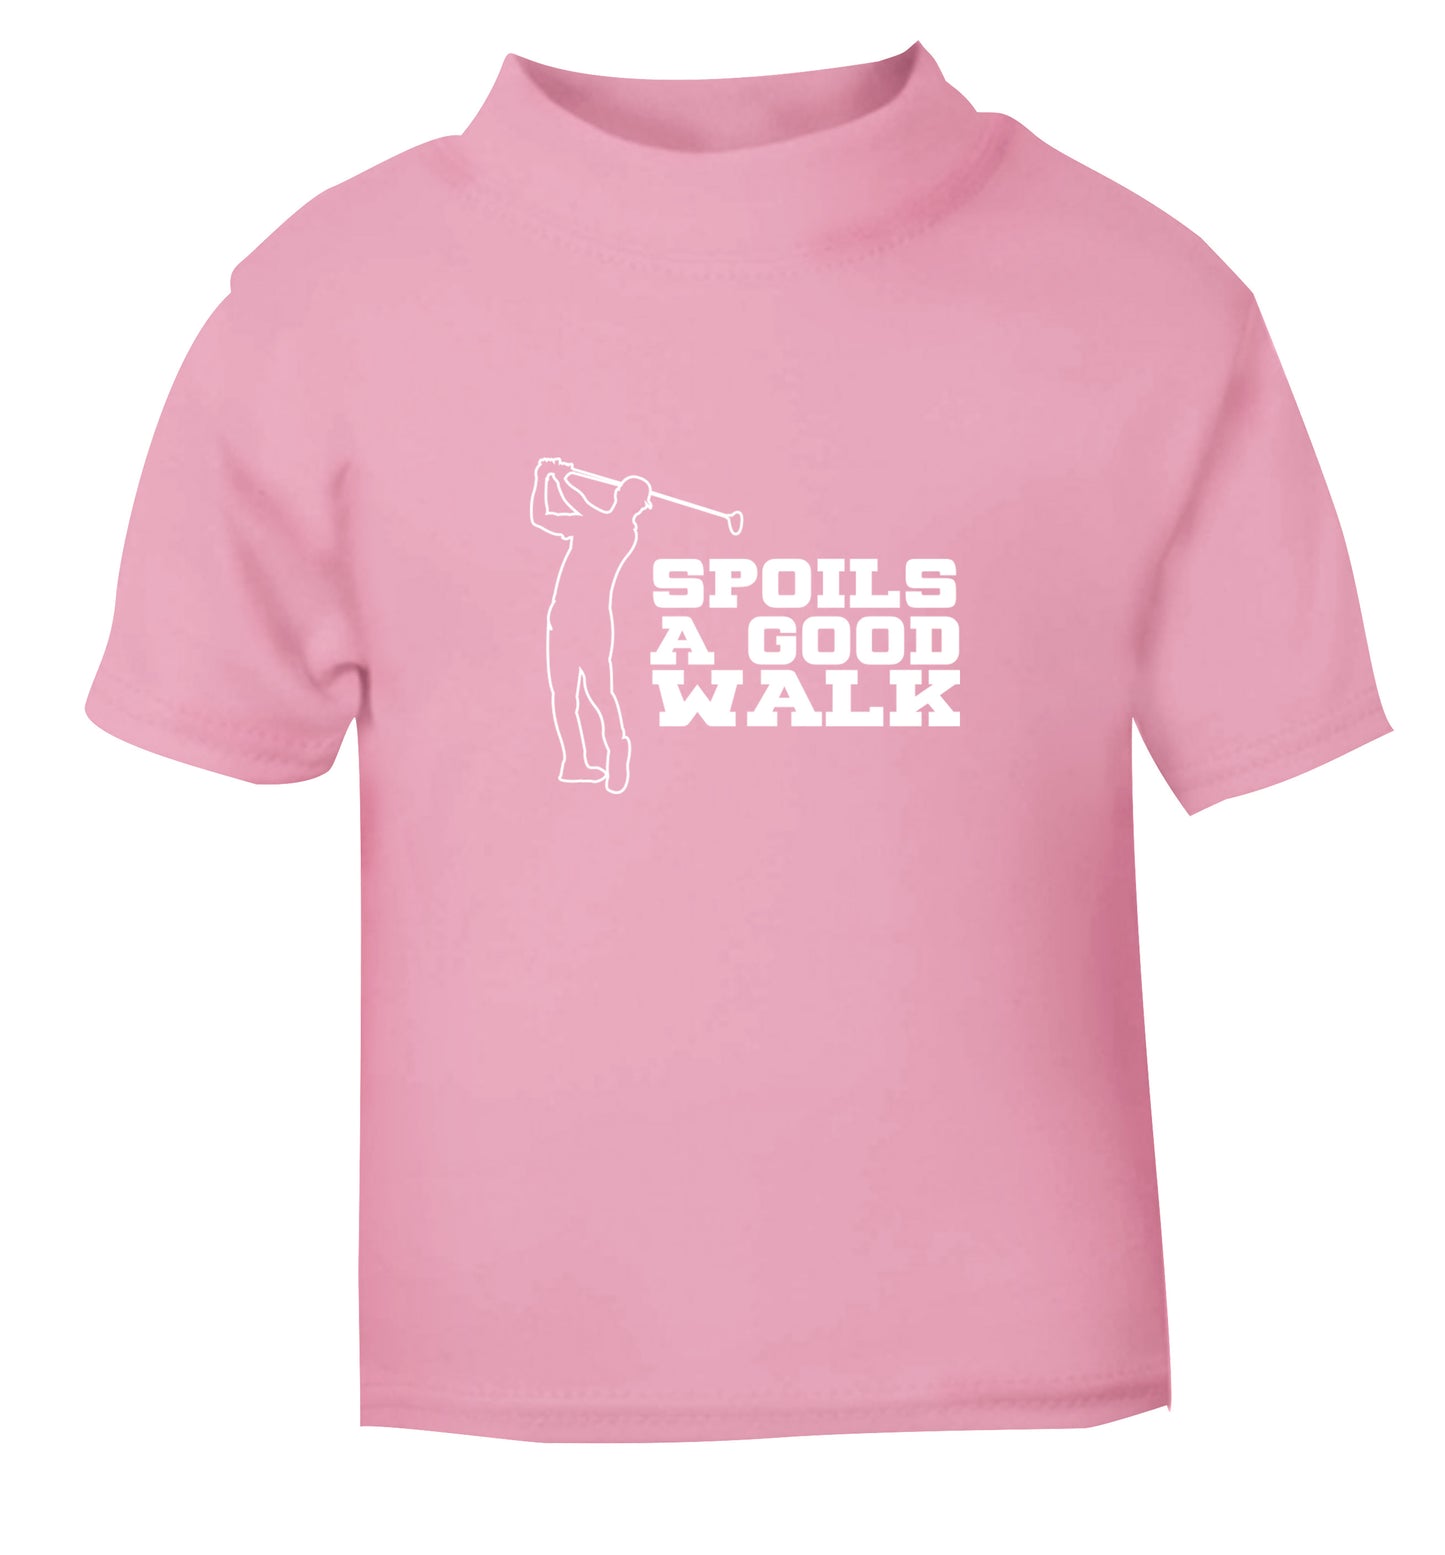 Golf spoils a good walk light pink Baby Toddler Tshirt 2 Years